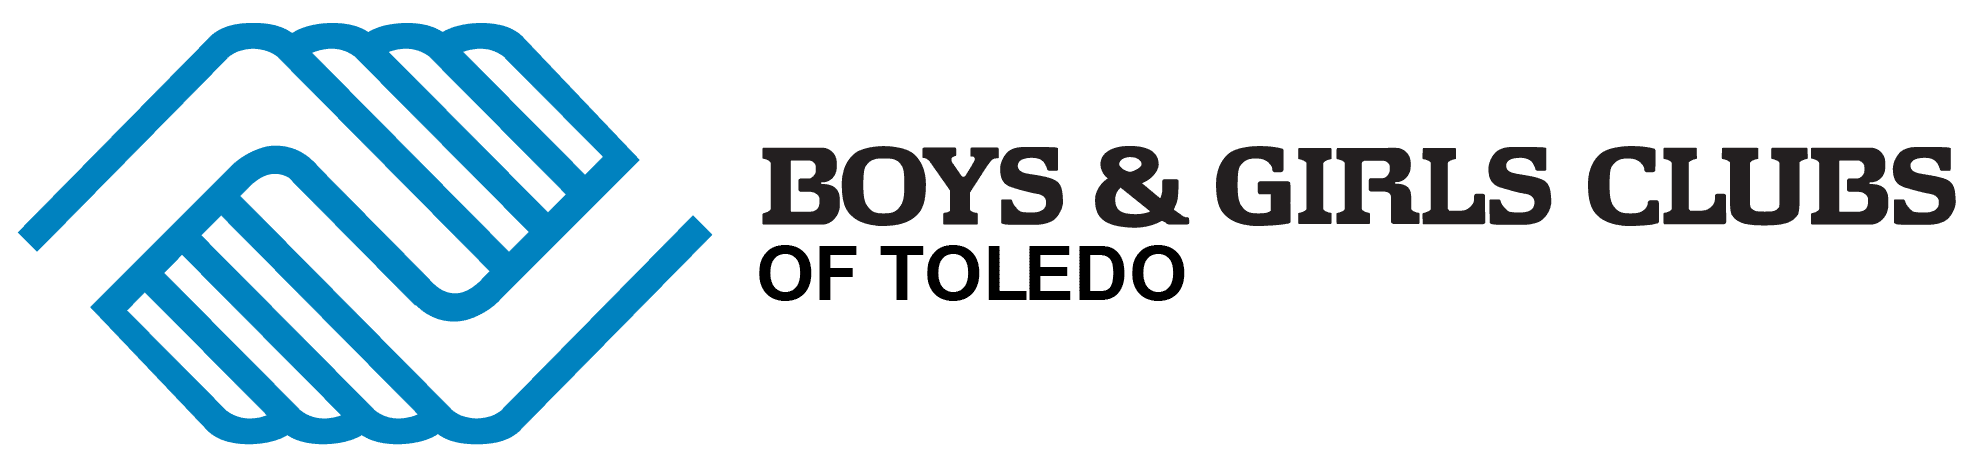 Boys & Girls Clubs of Toledo